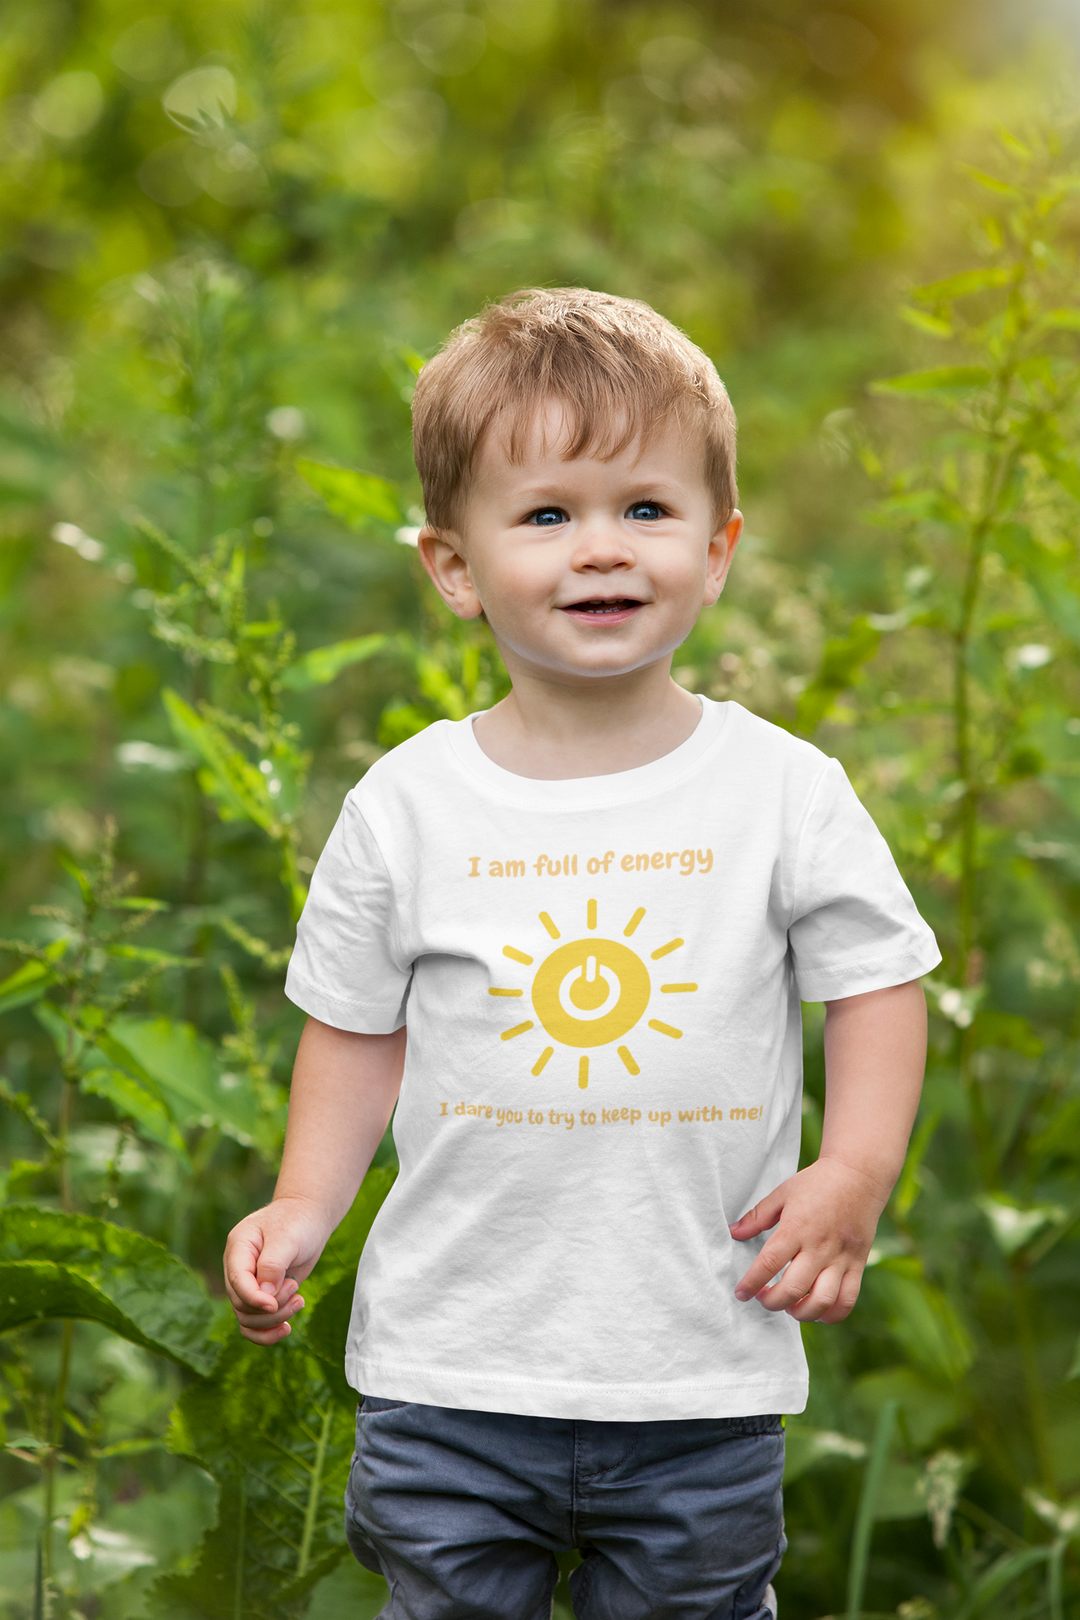 I am full of energy. Short sleeve t shirt for toddler and kids. - TeesForToddlersandKids -  t-shirt - positive - i-am-full-of-energy-short-sleeve-t-shirt-for-toddler-and-kids